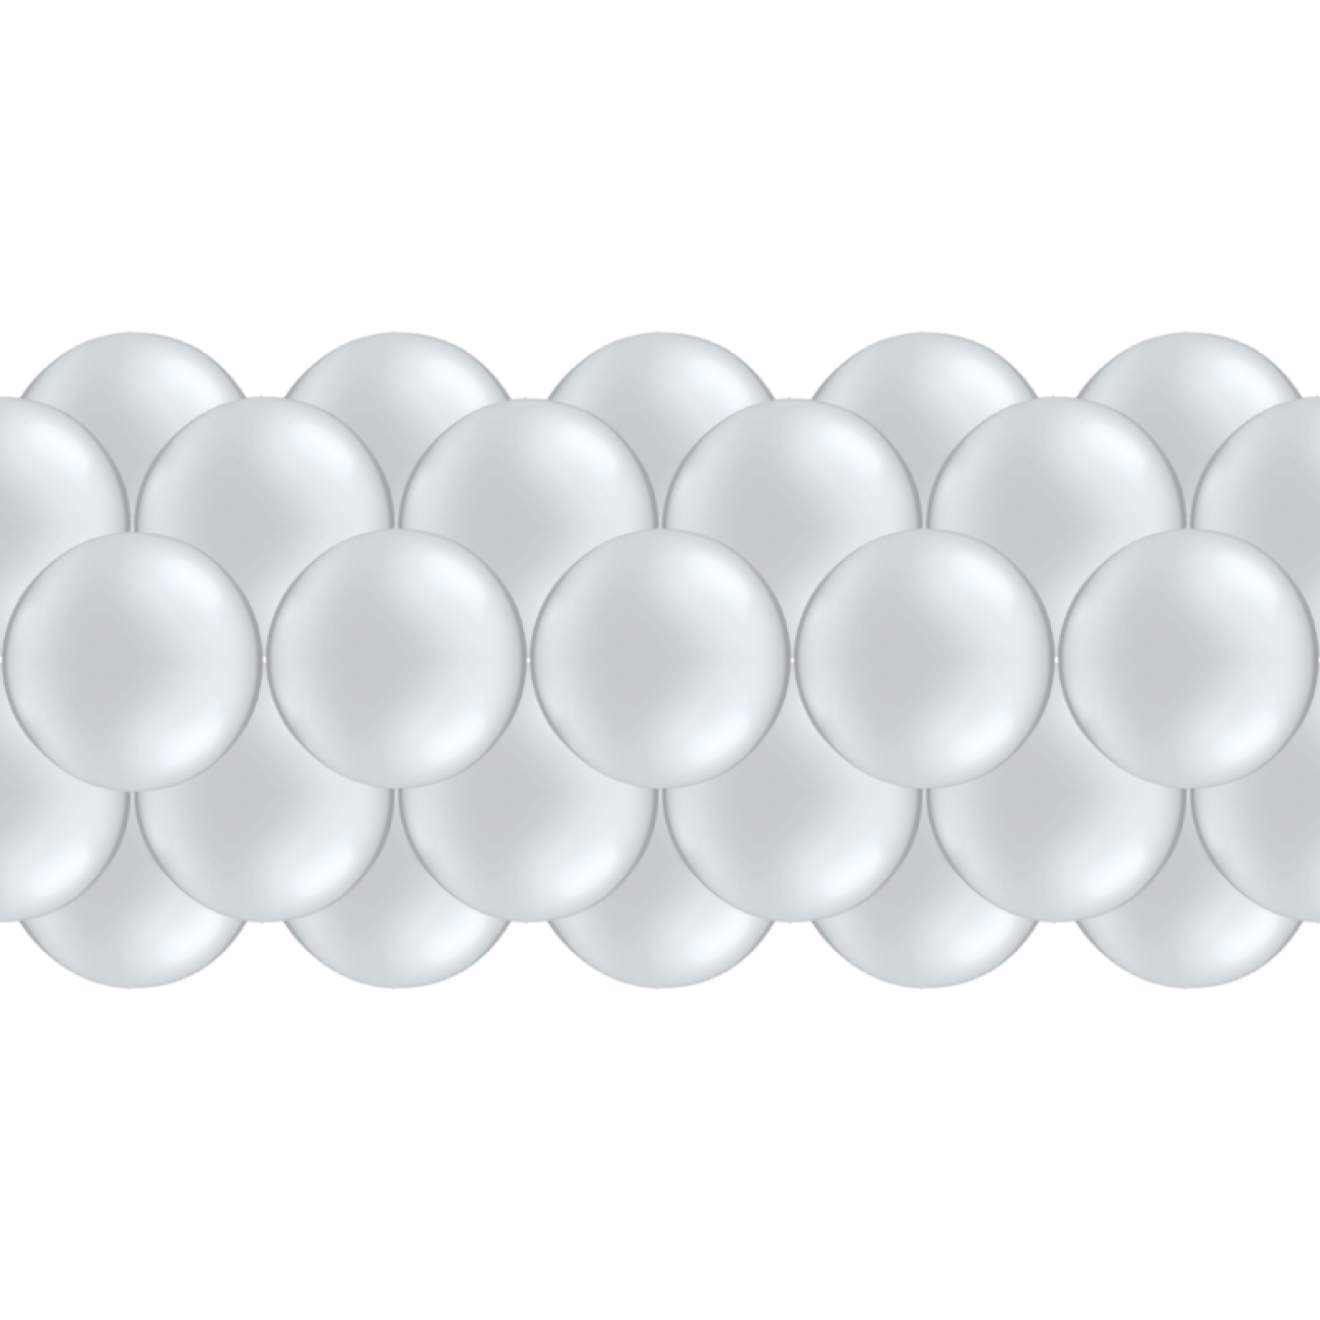 Luftballongirlanden-Set Silber (Metallic / Glänzend) ab 3 m